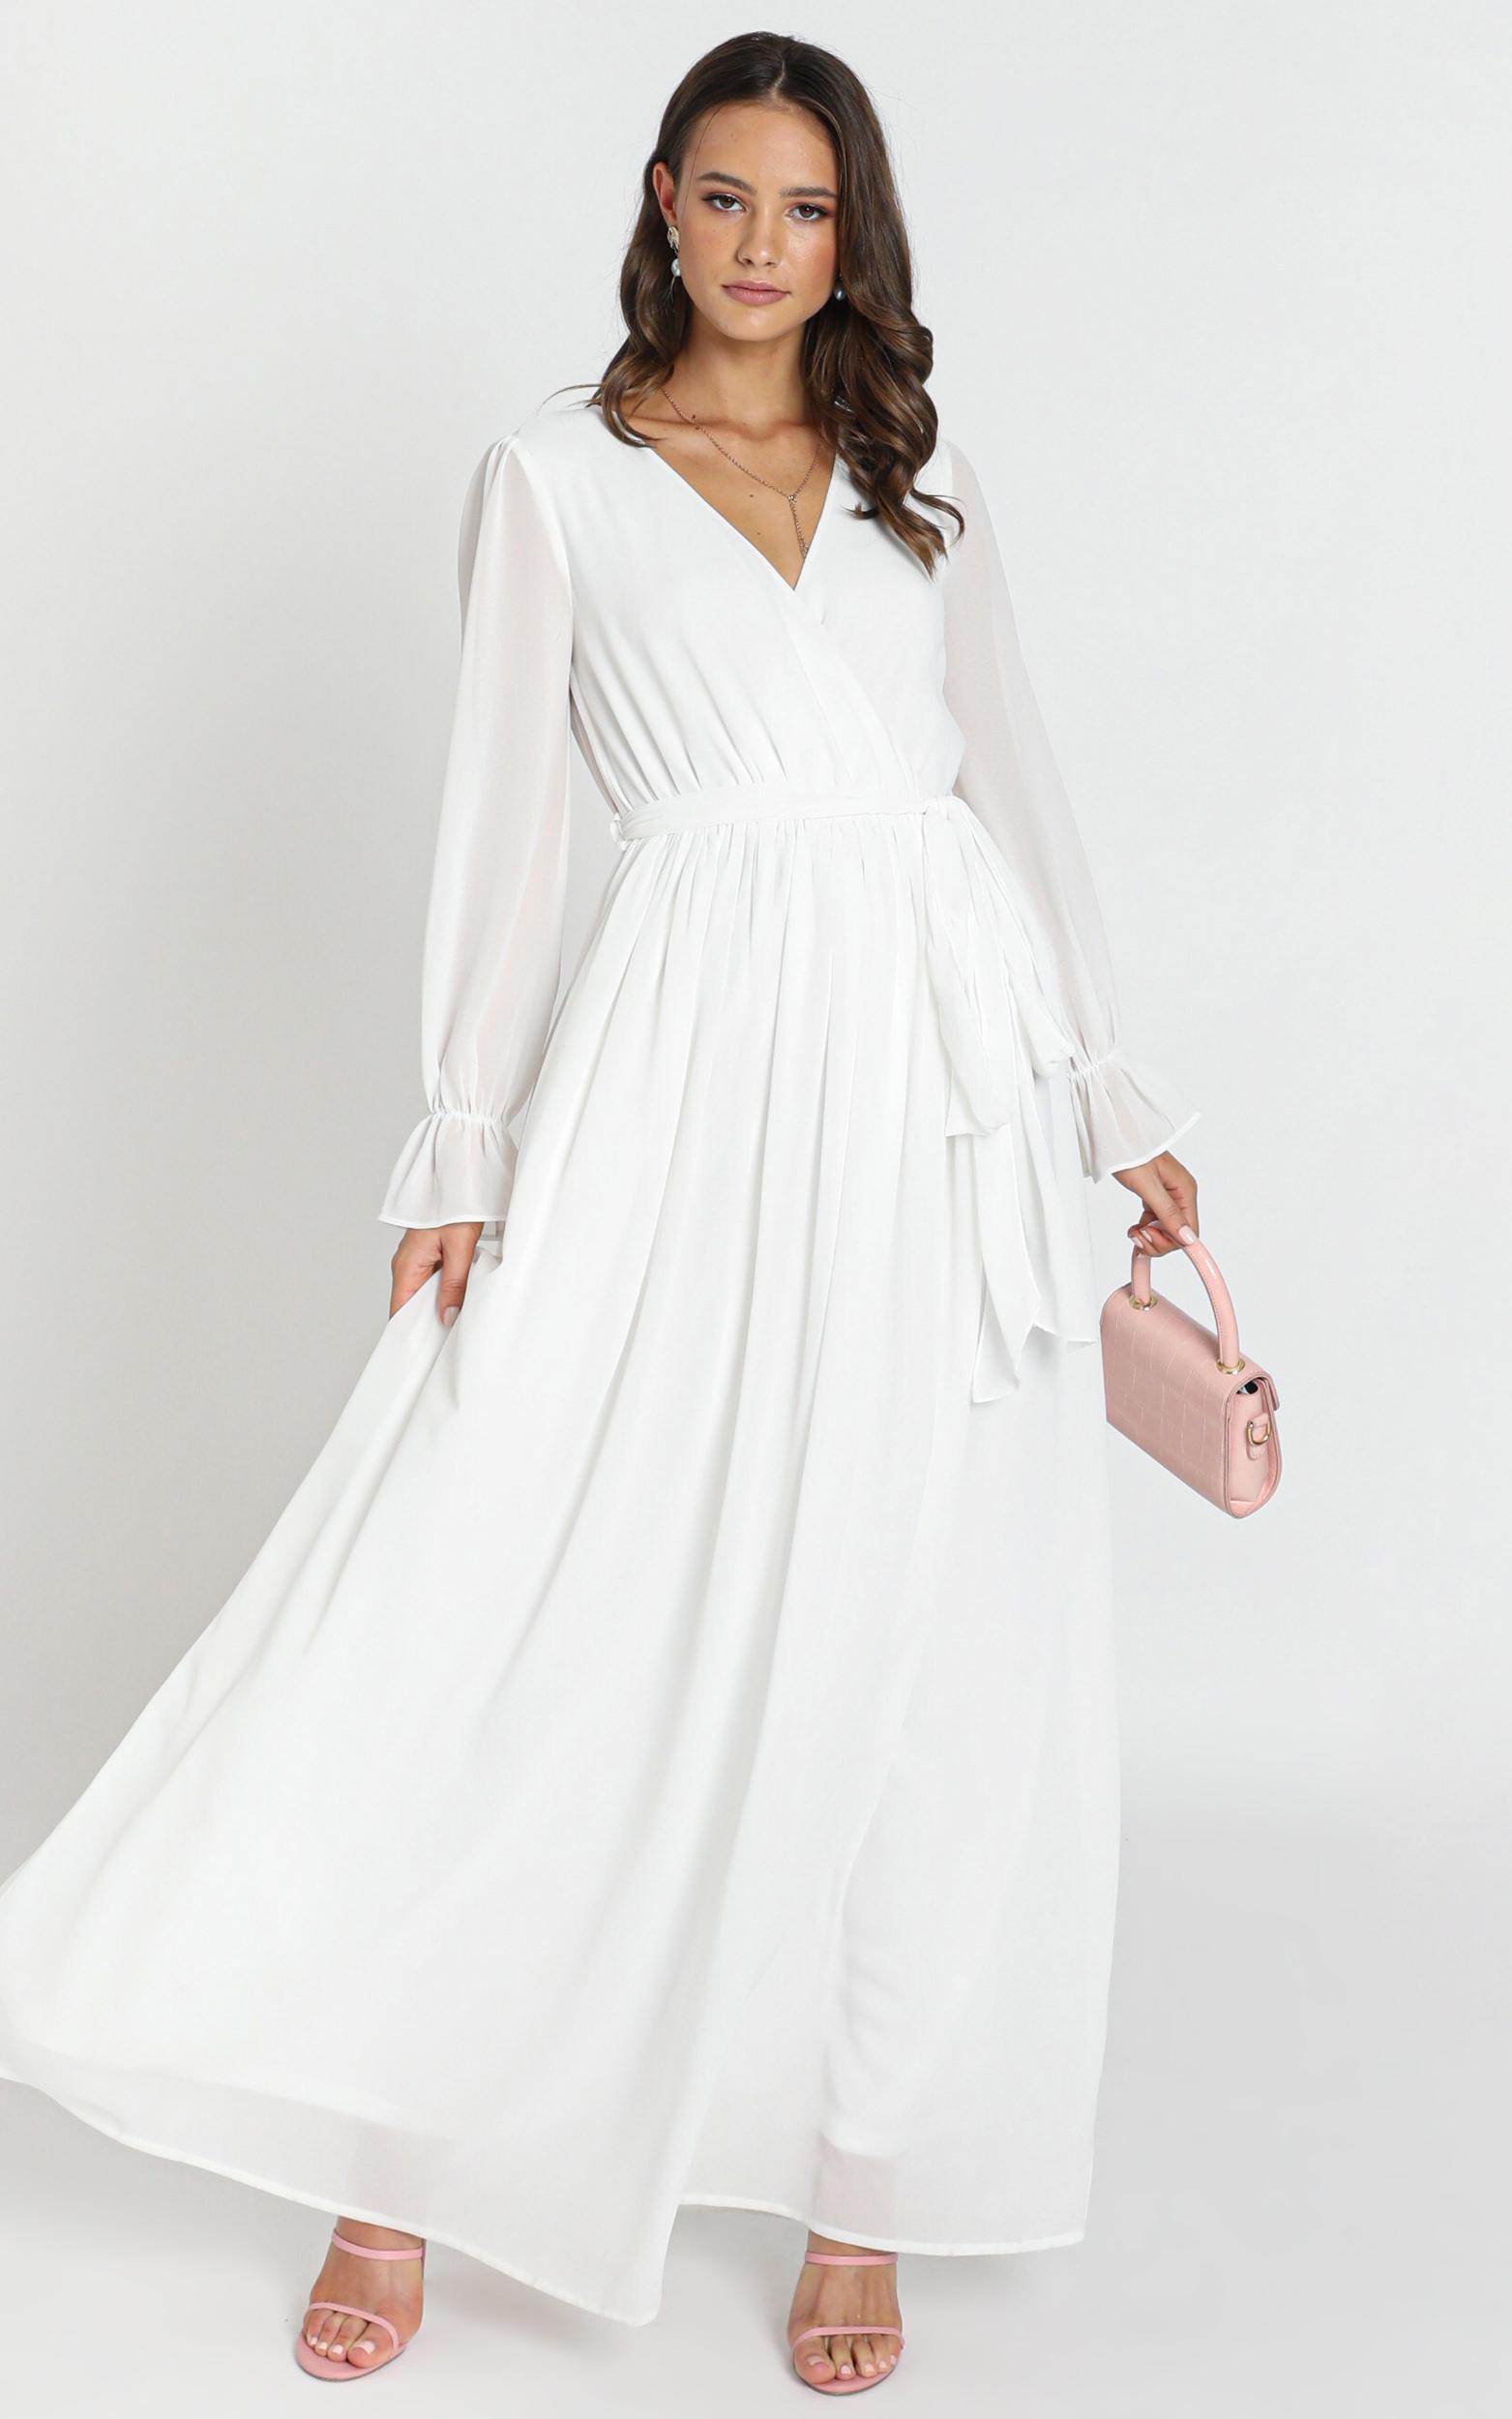 white long sleeve dress casual